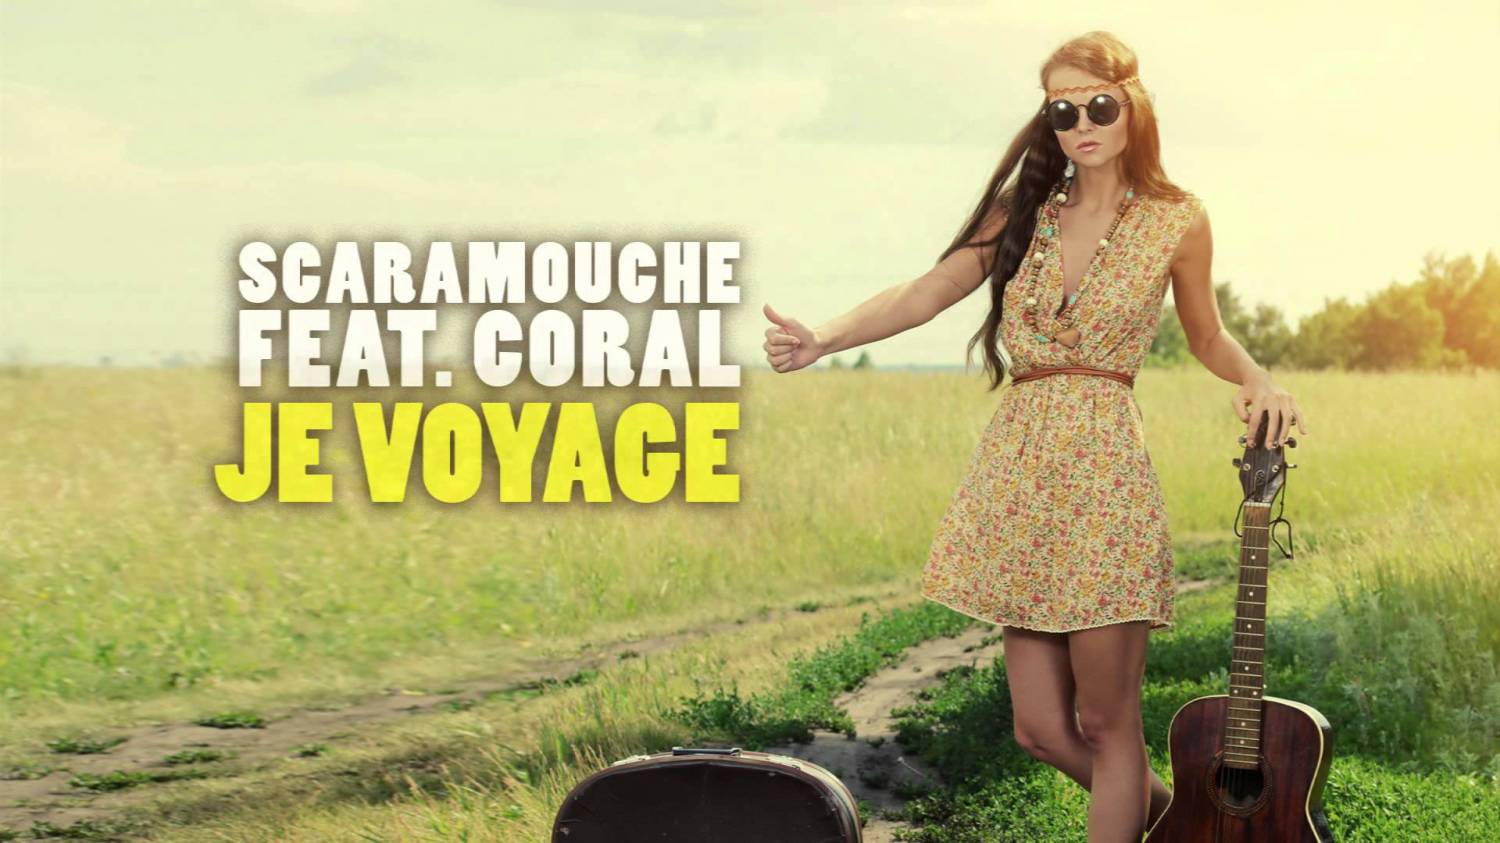 Музыка лето мп3. Scaramouche feat. Voyage mp3. Voyage Voyage mp3. Манга Scaramouche feat Coral.